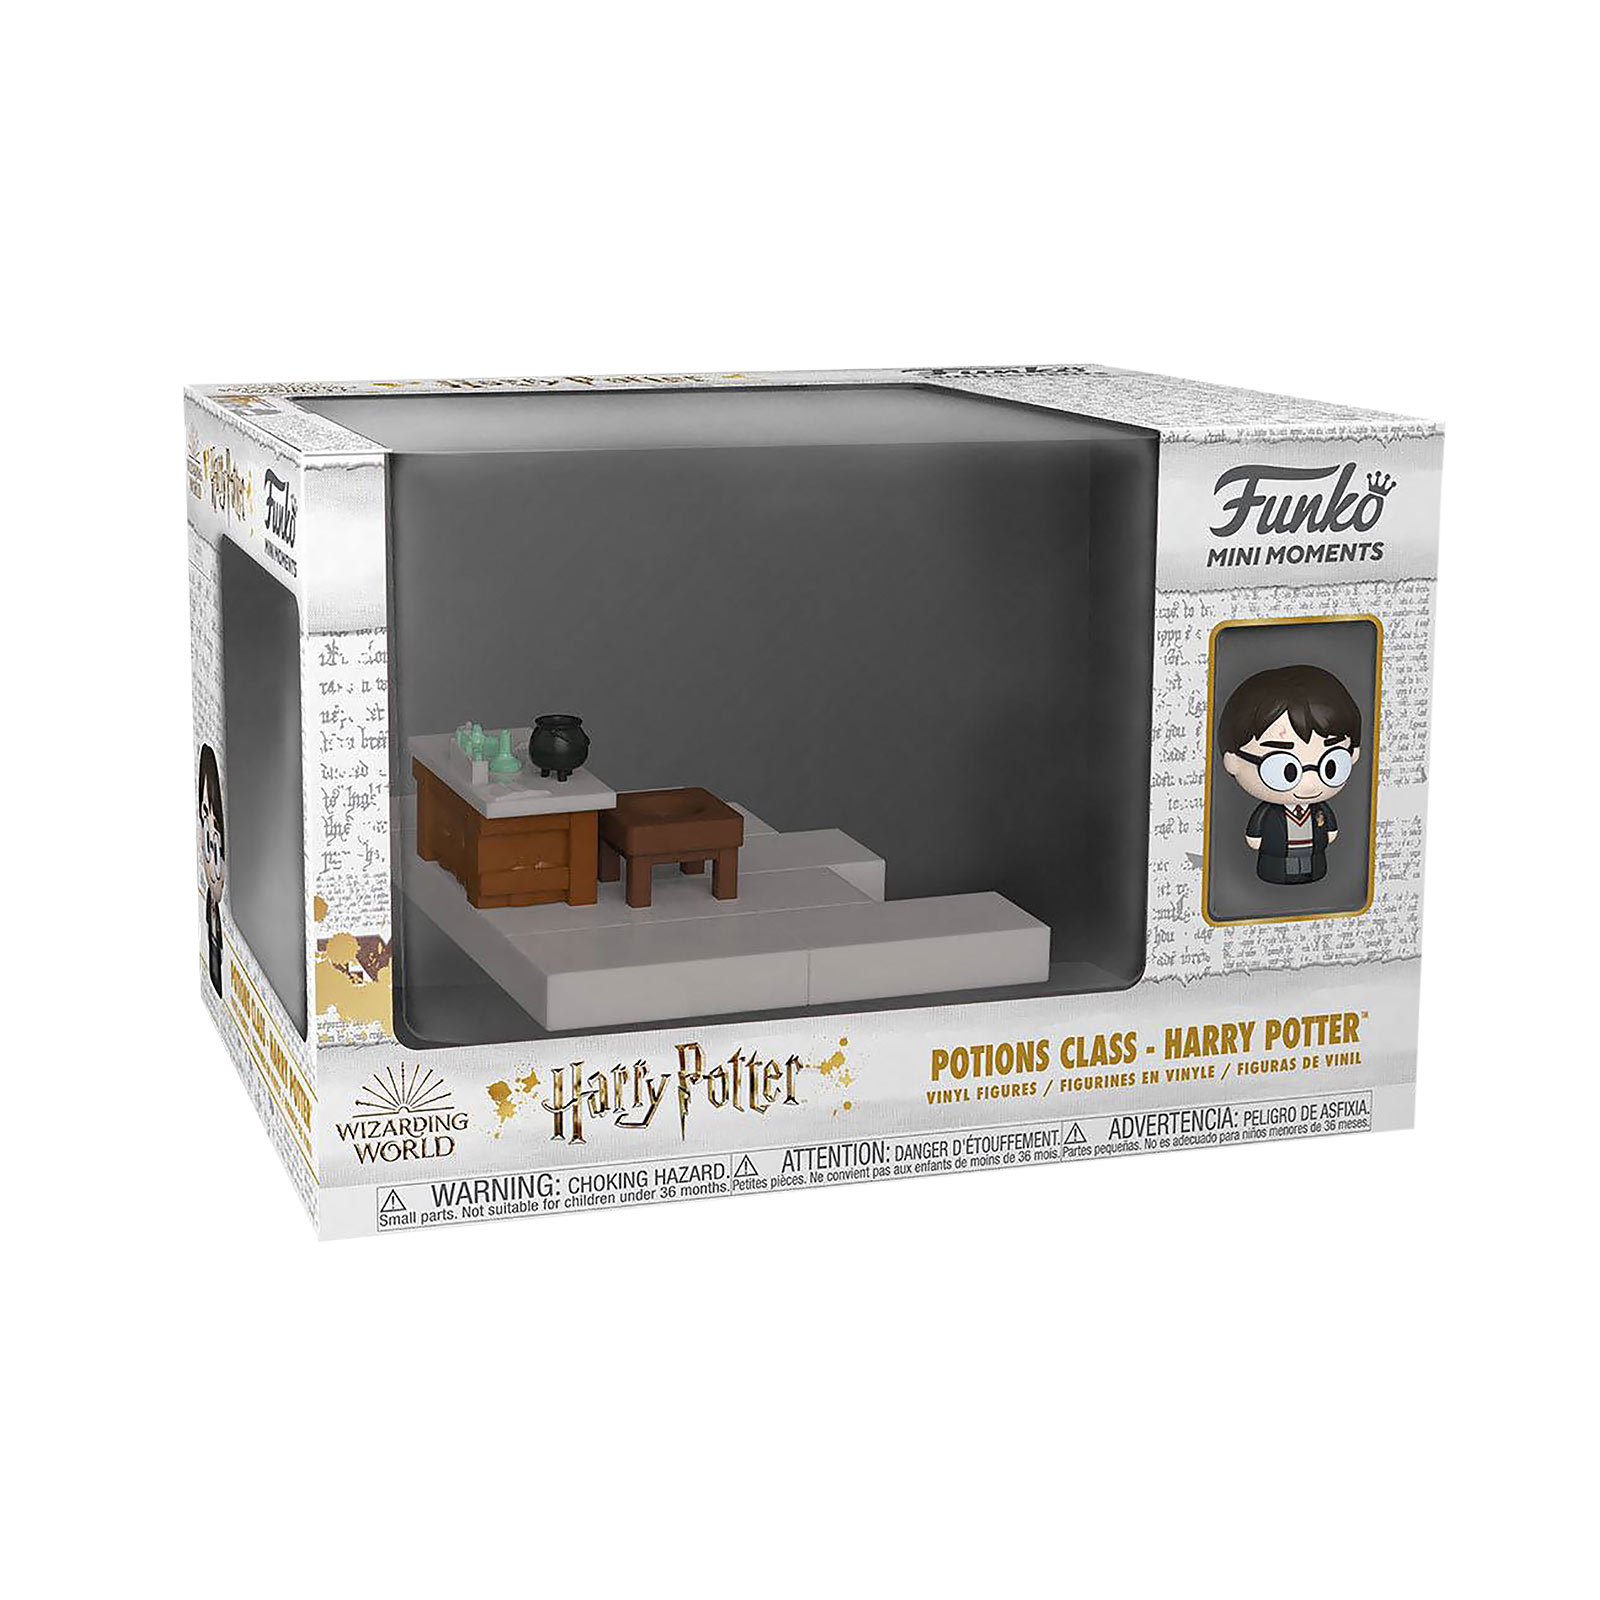 Harry Potter - Potion Class Funko Pop Mini Moments Figure